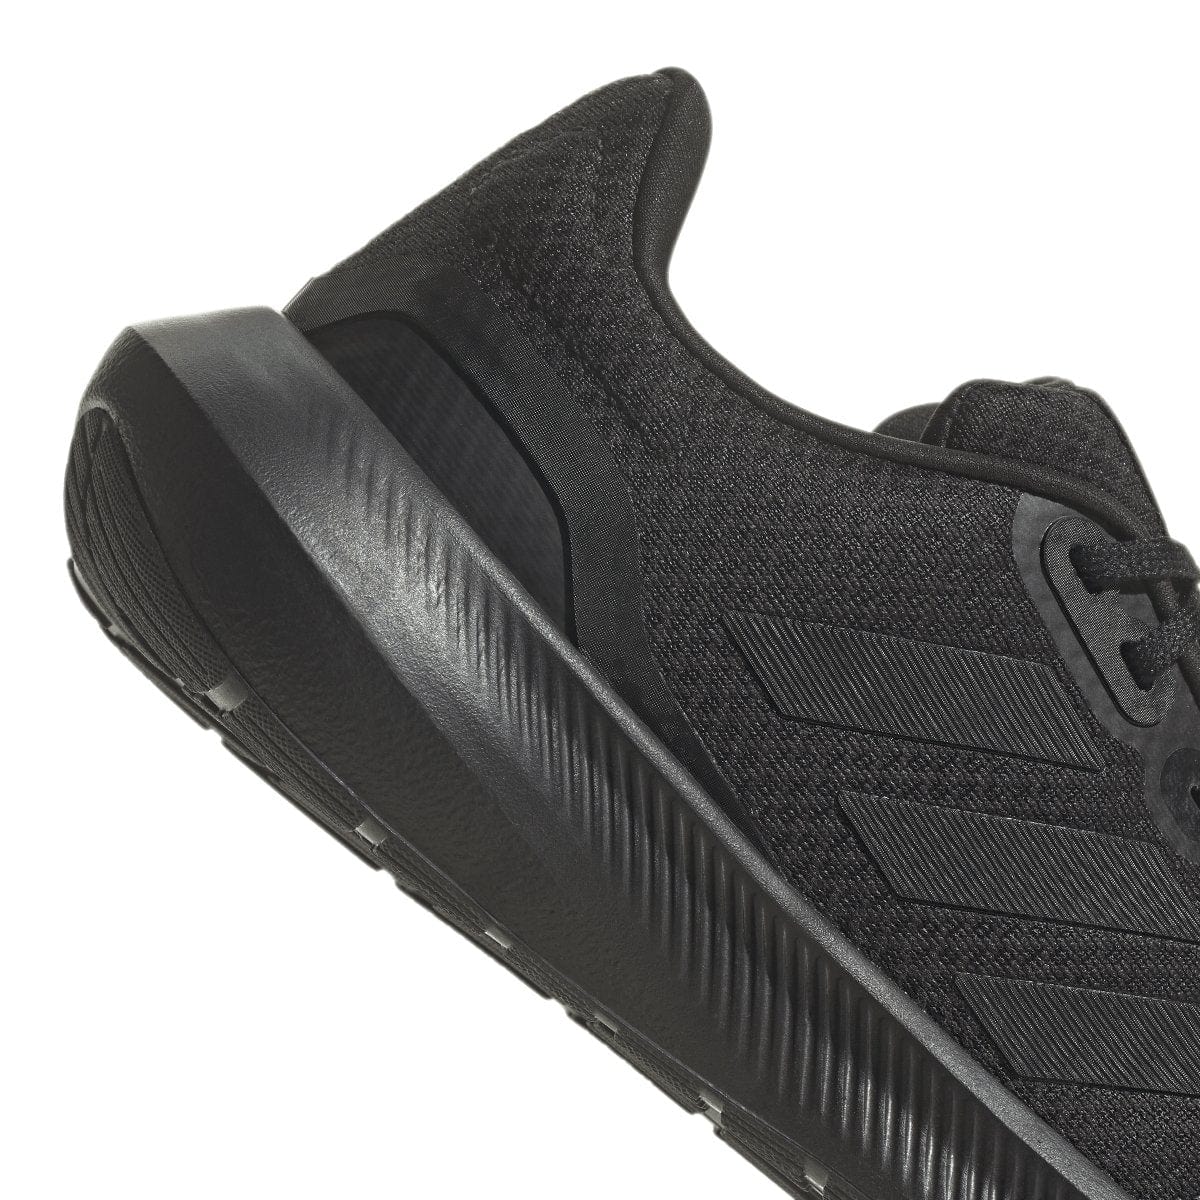 Adidas ADIDAS WOMEN'S RUNFALCON 3 TRIPLE BLACK RUNNING SHOES - INSPORT